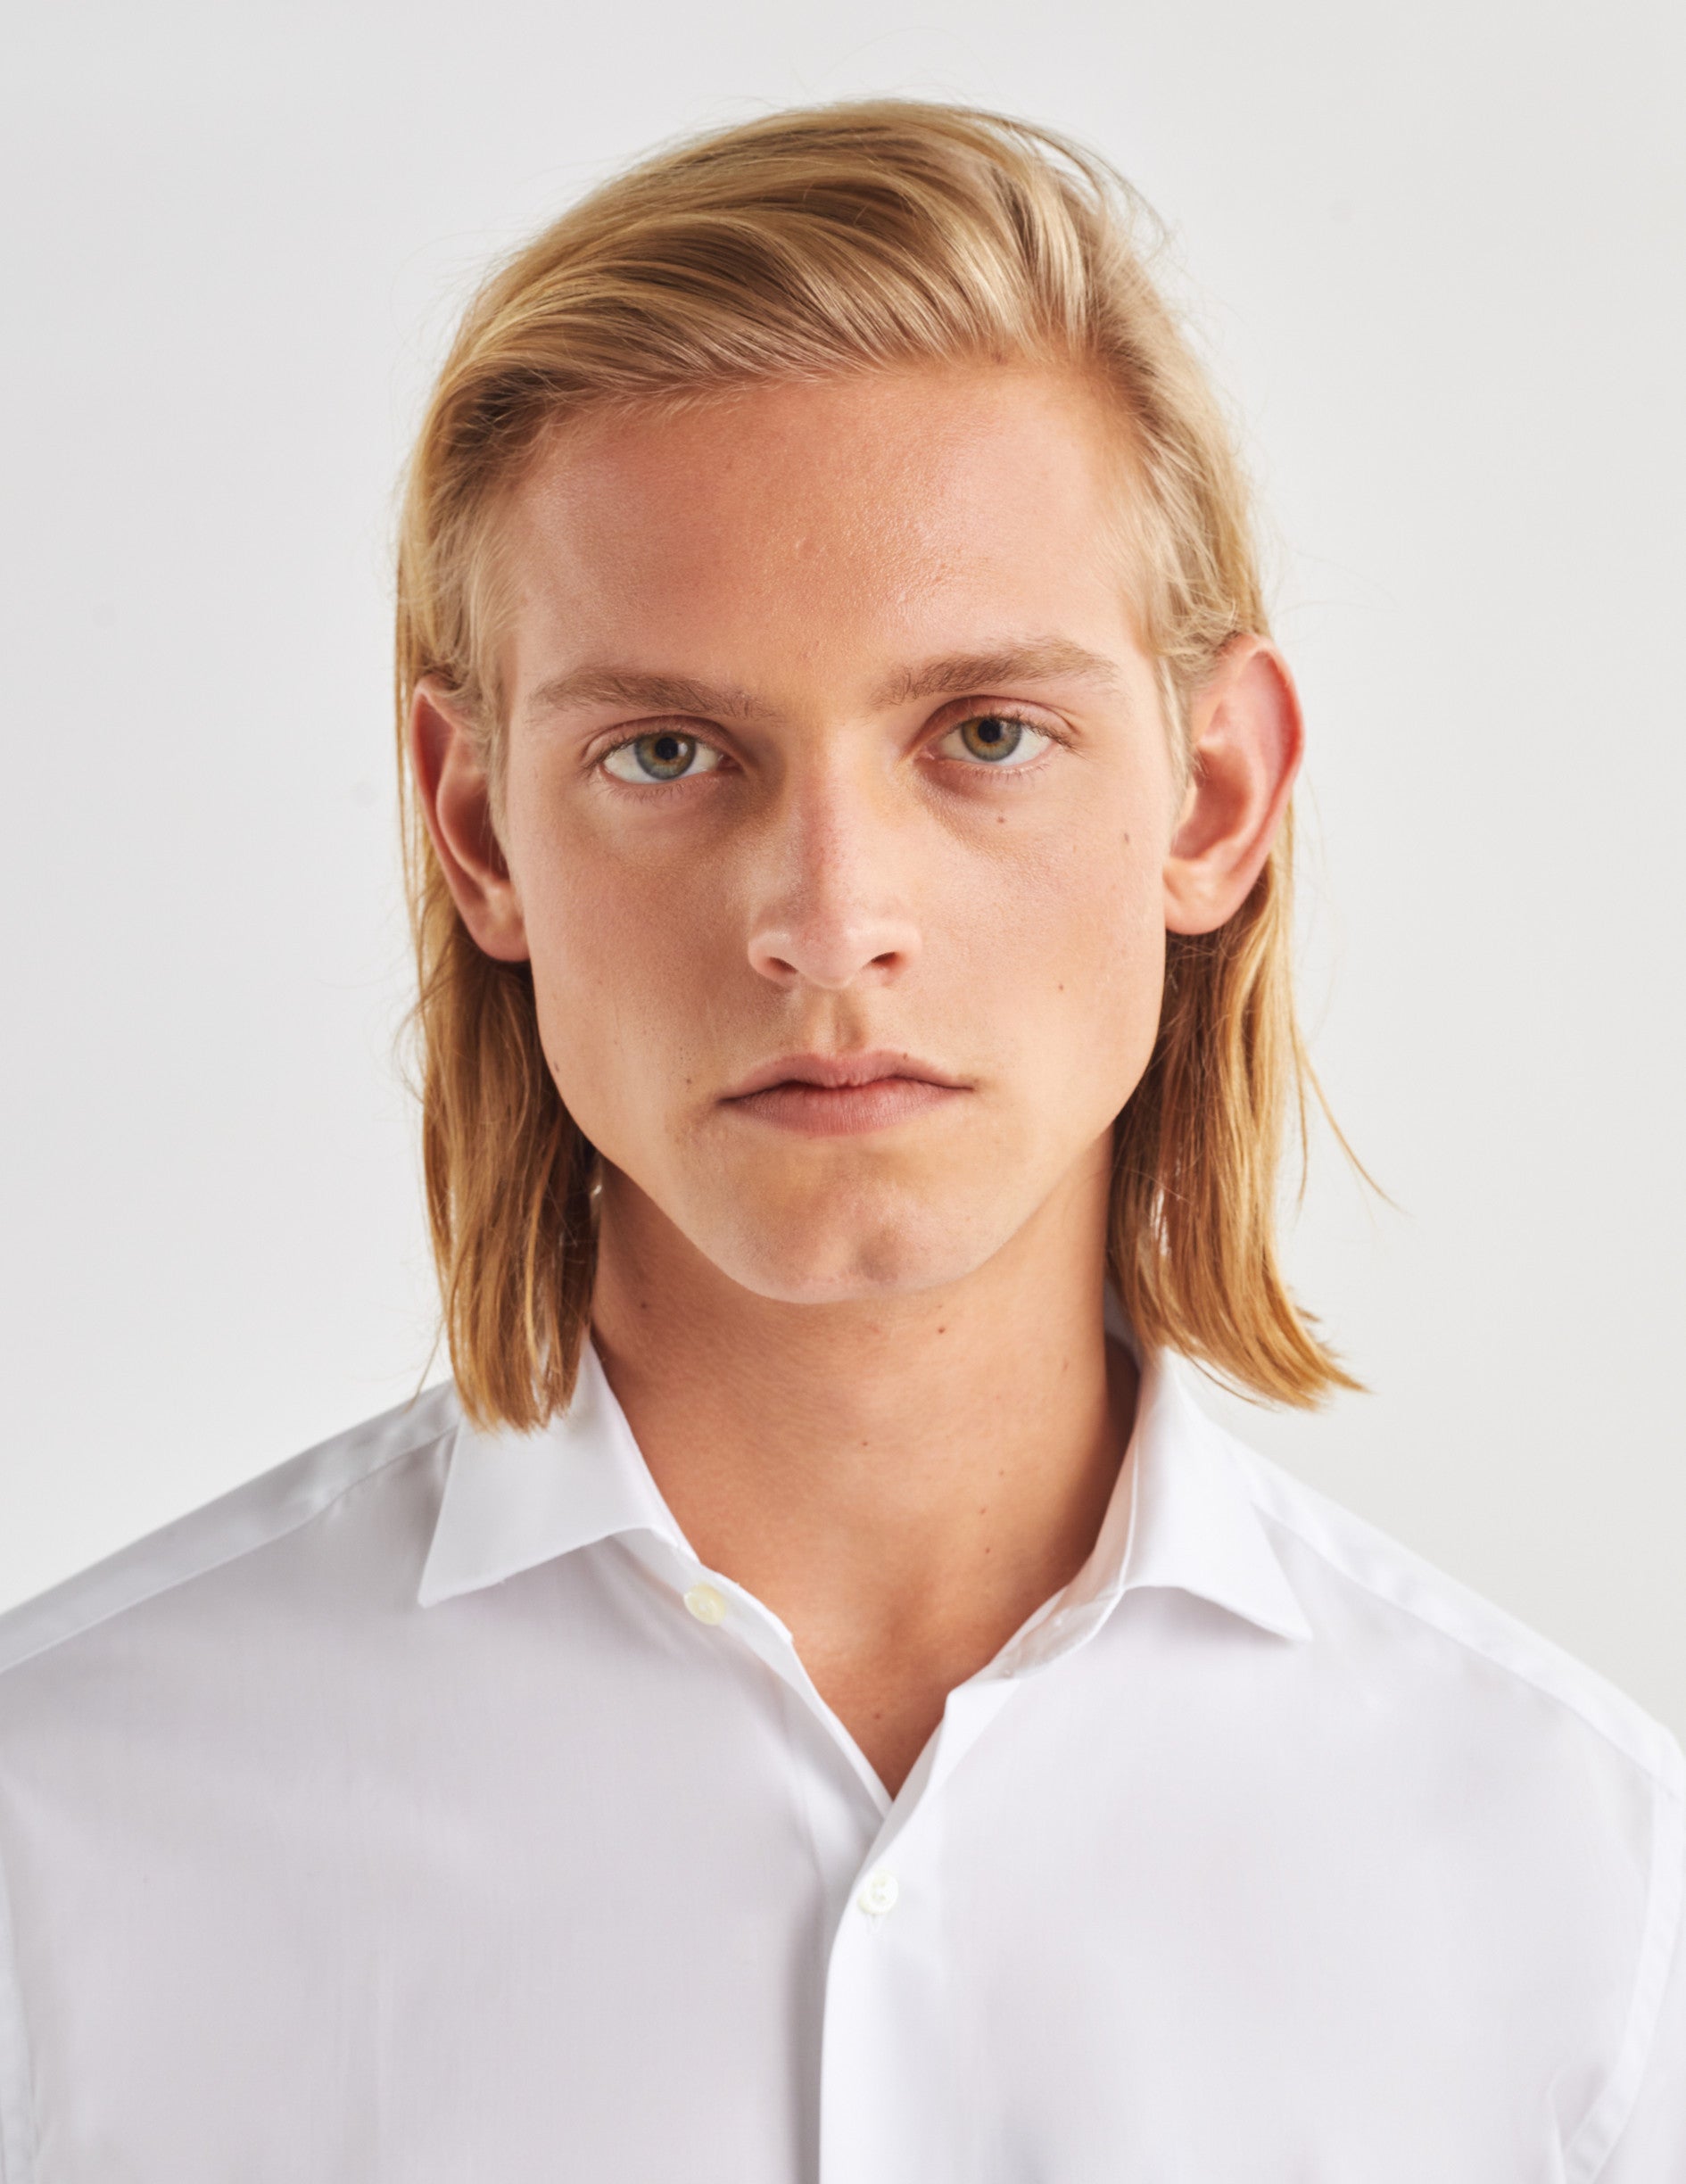 Semi-fitted white shirt - Poplin - Italian Collar - French Cuffs